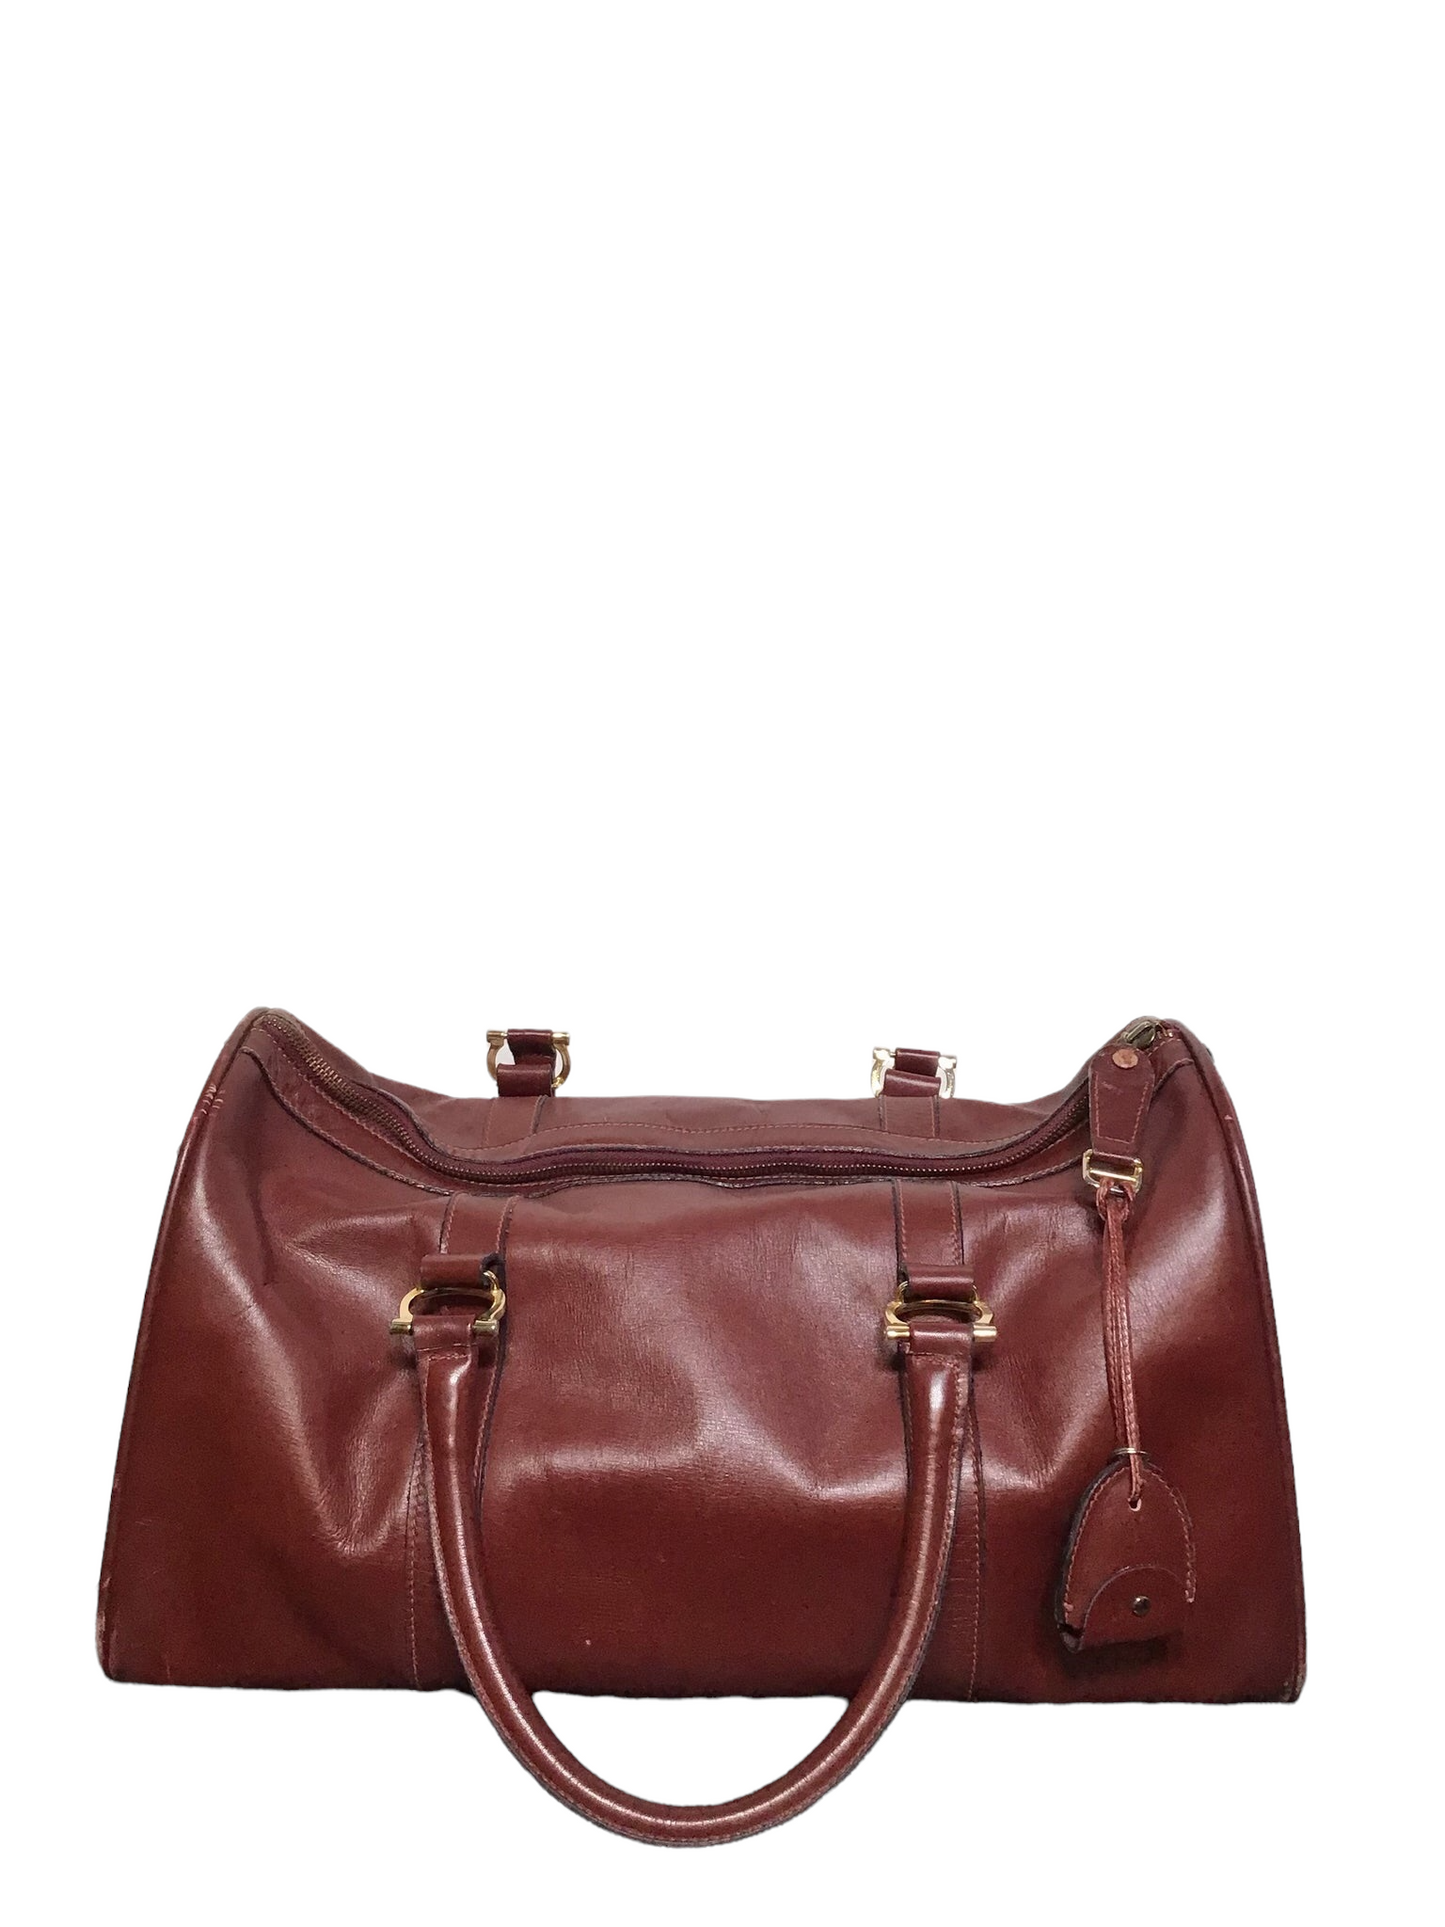 Cartier Burgundy Leather Travel Bag